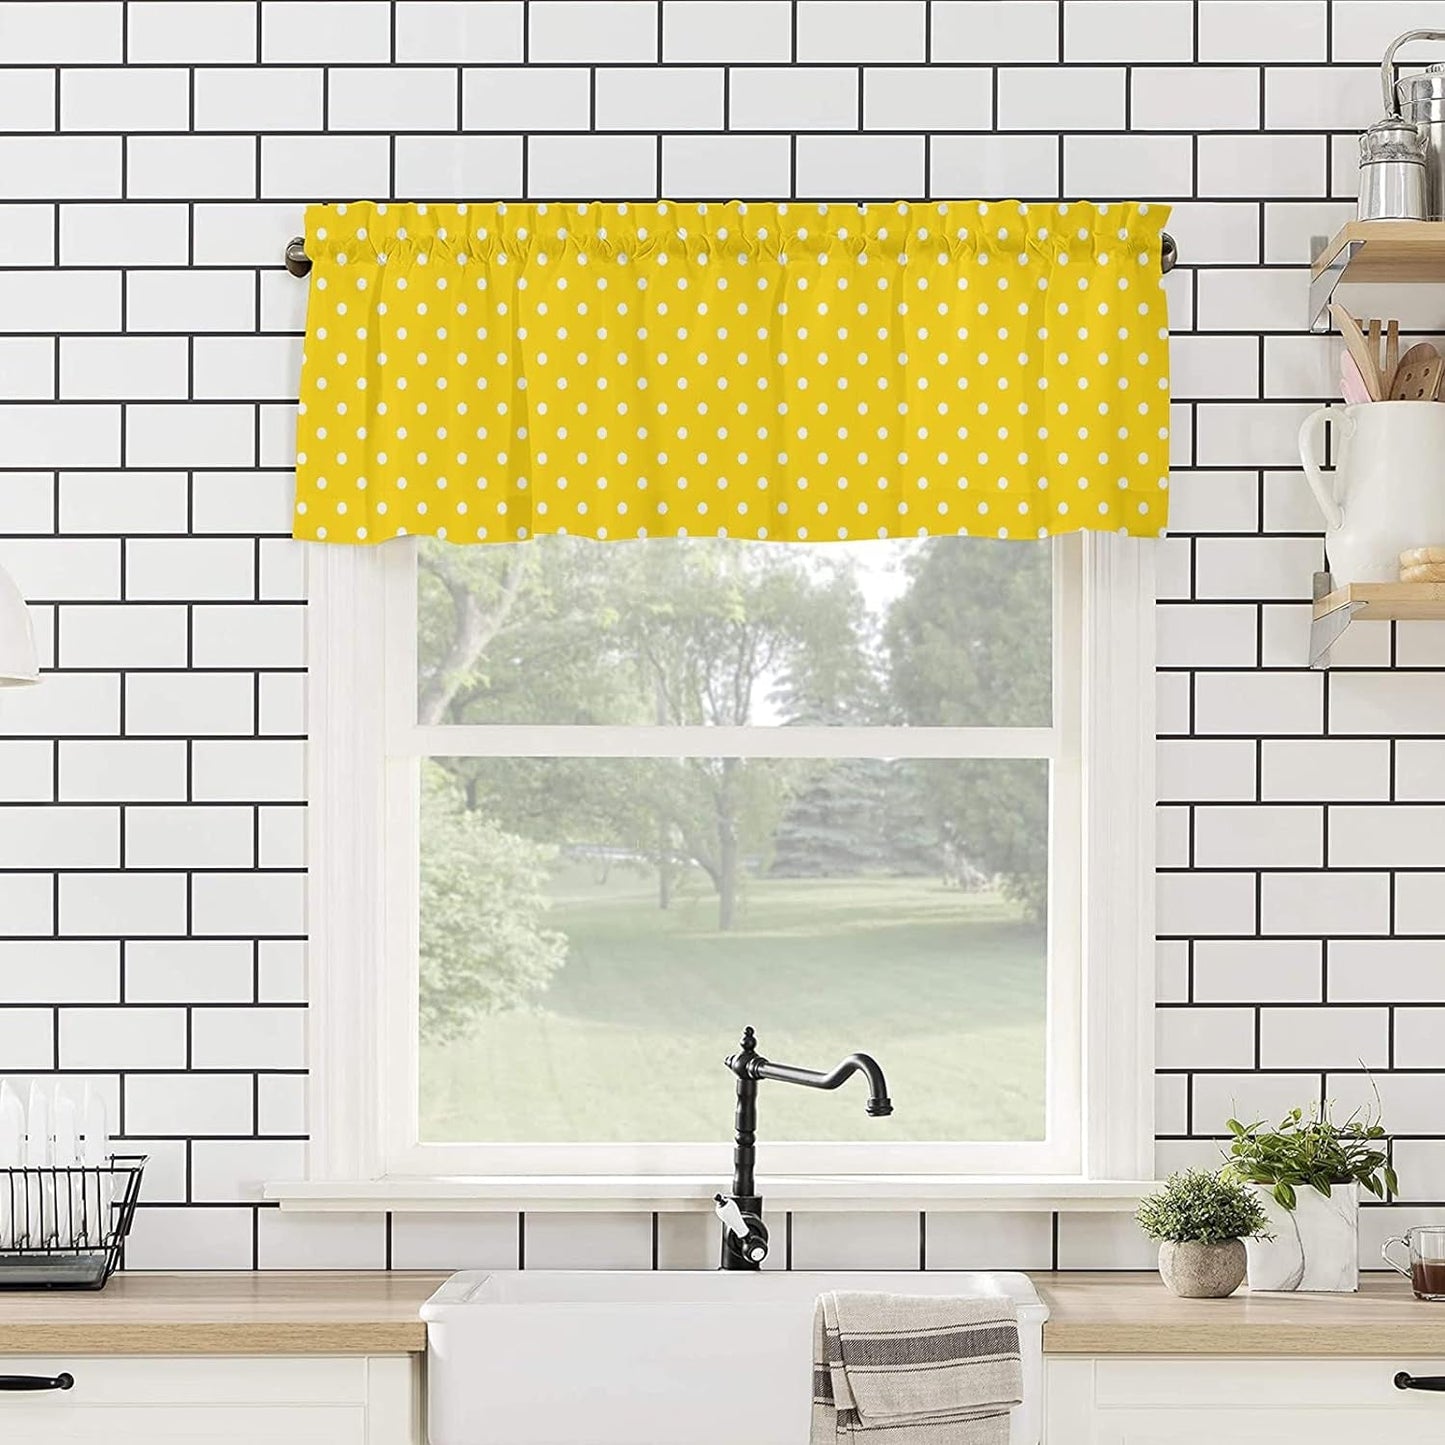 Curtain Valance, White Polka Dot Yellow Rod Pocket Valance Short Window Treatment Decor Curtains for Kitchen Bathroom Bedroom,1 Panel 54" X 18"